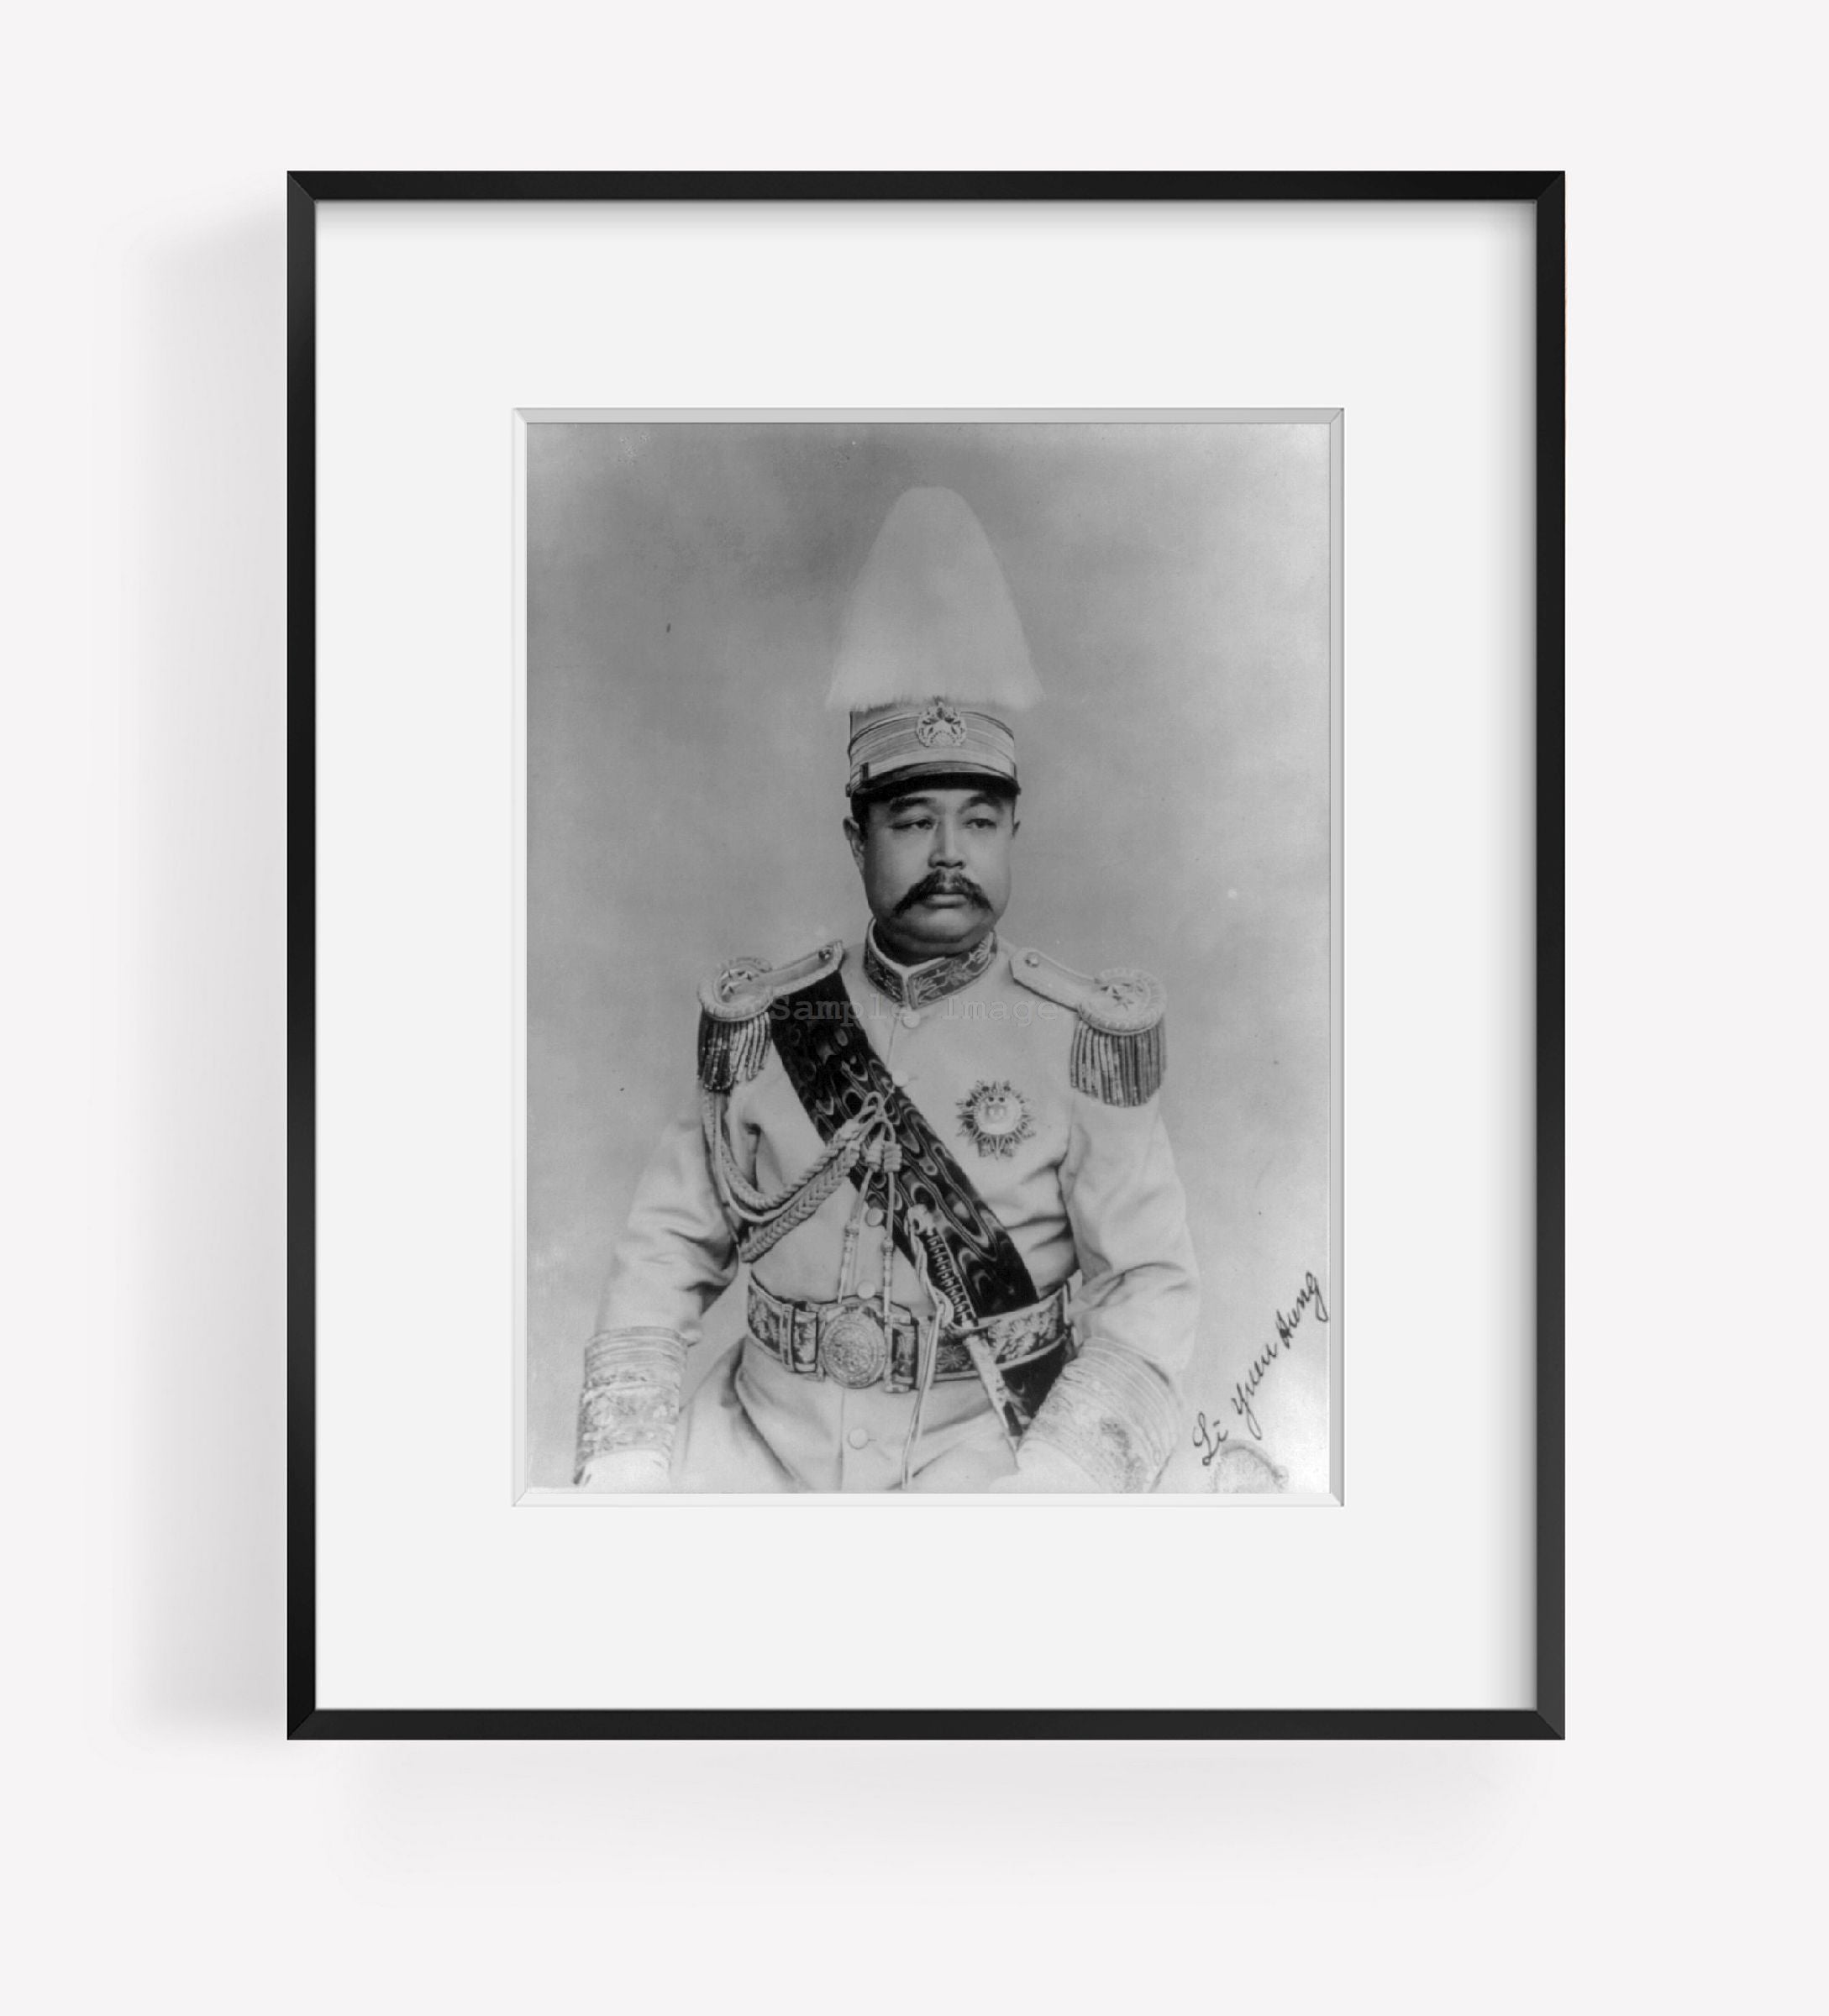 Photo: Li Yuanhong, 1864-1928, Chinese General, President, China